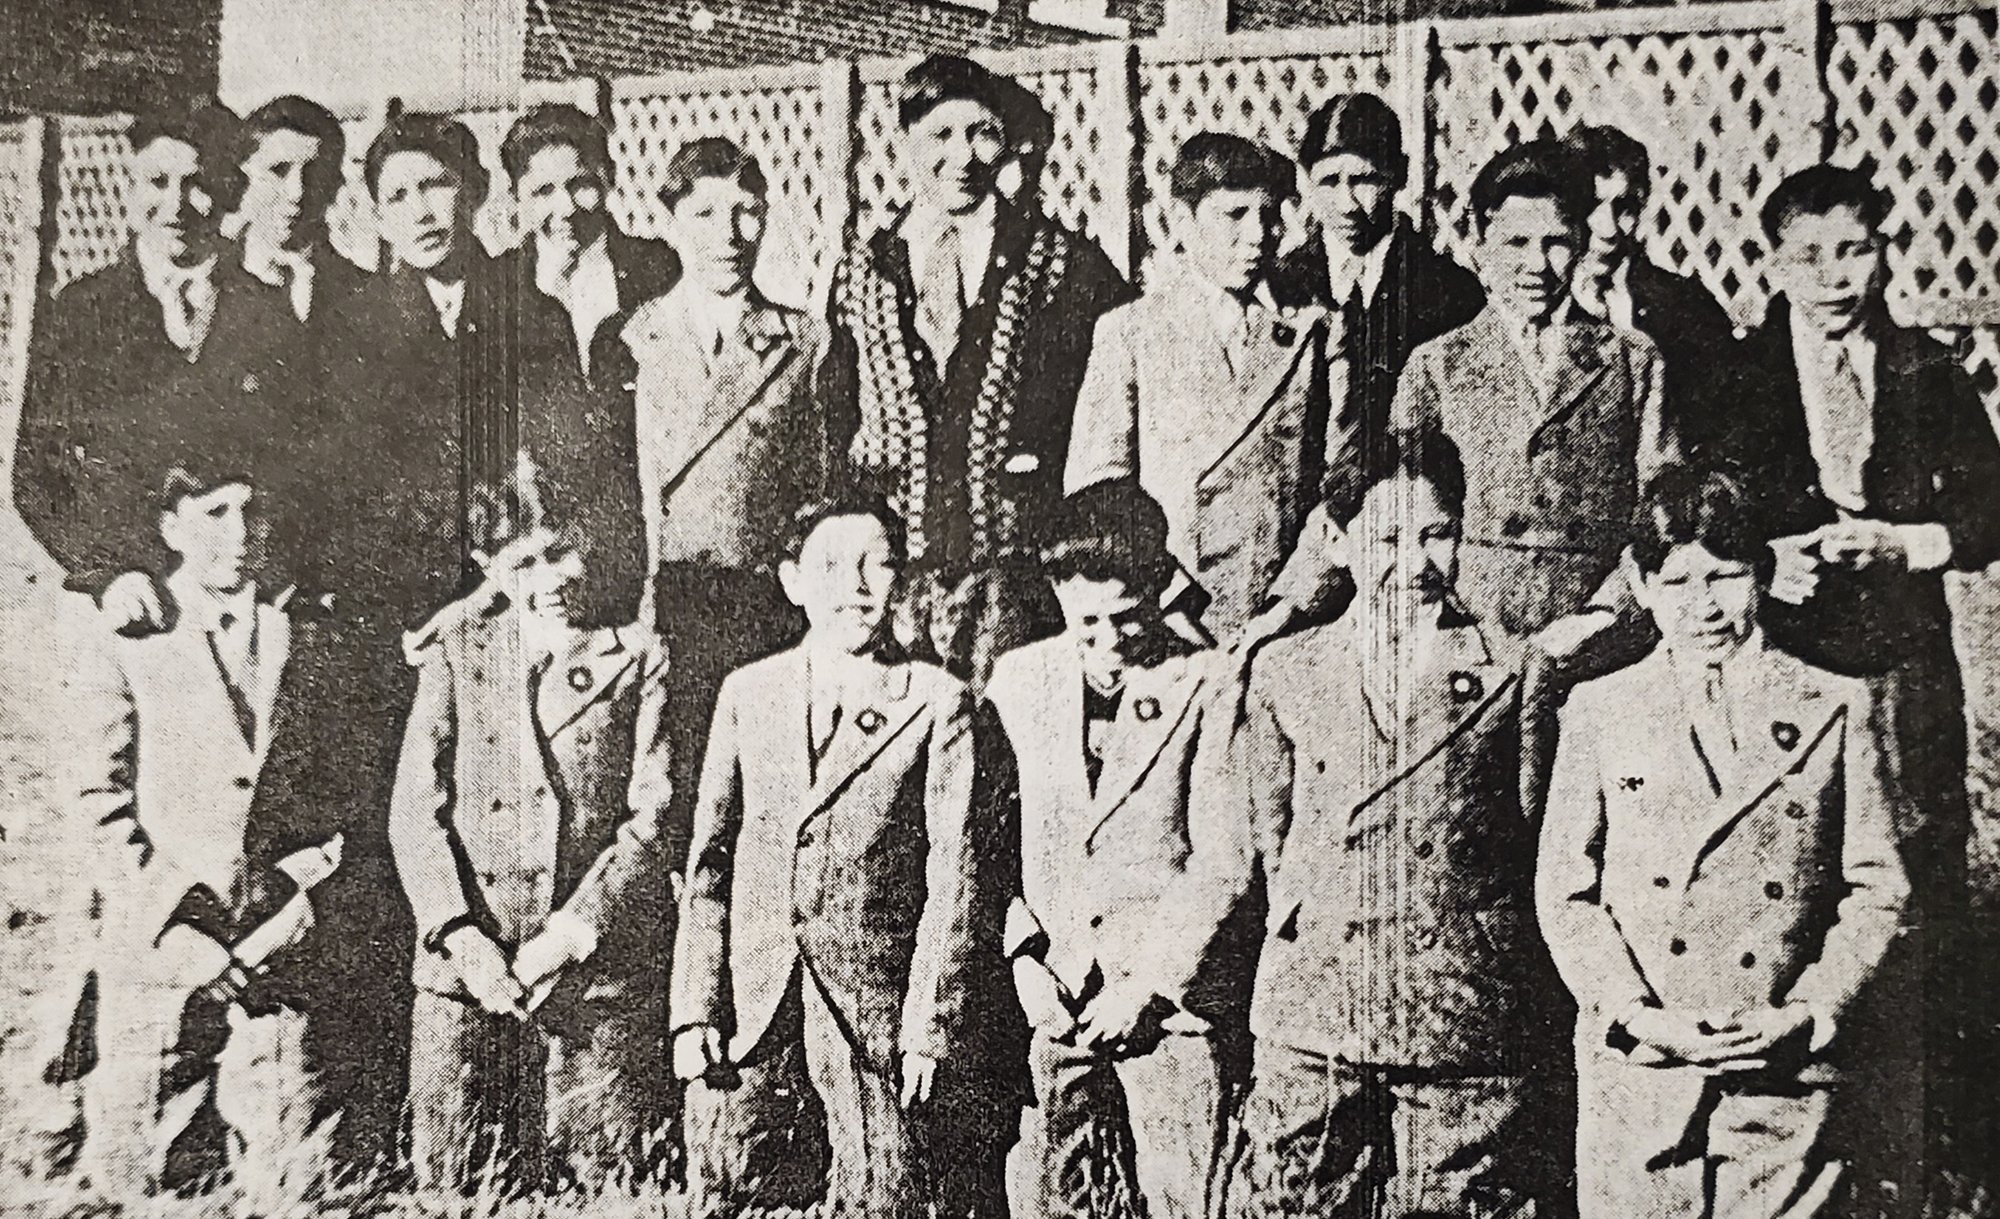 Boys at a residential school